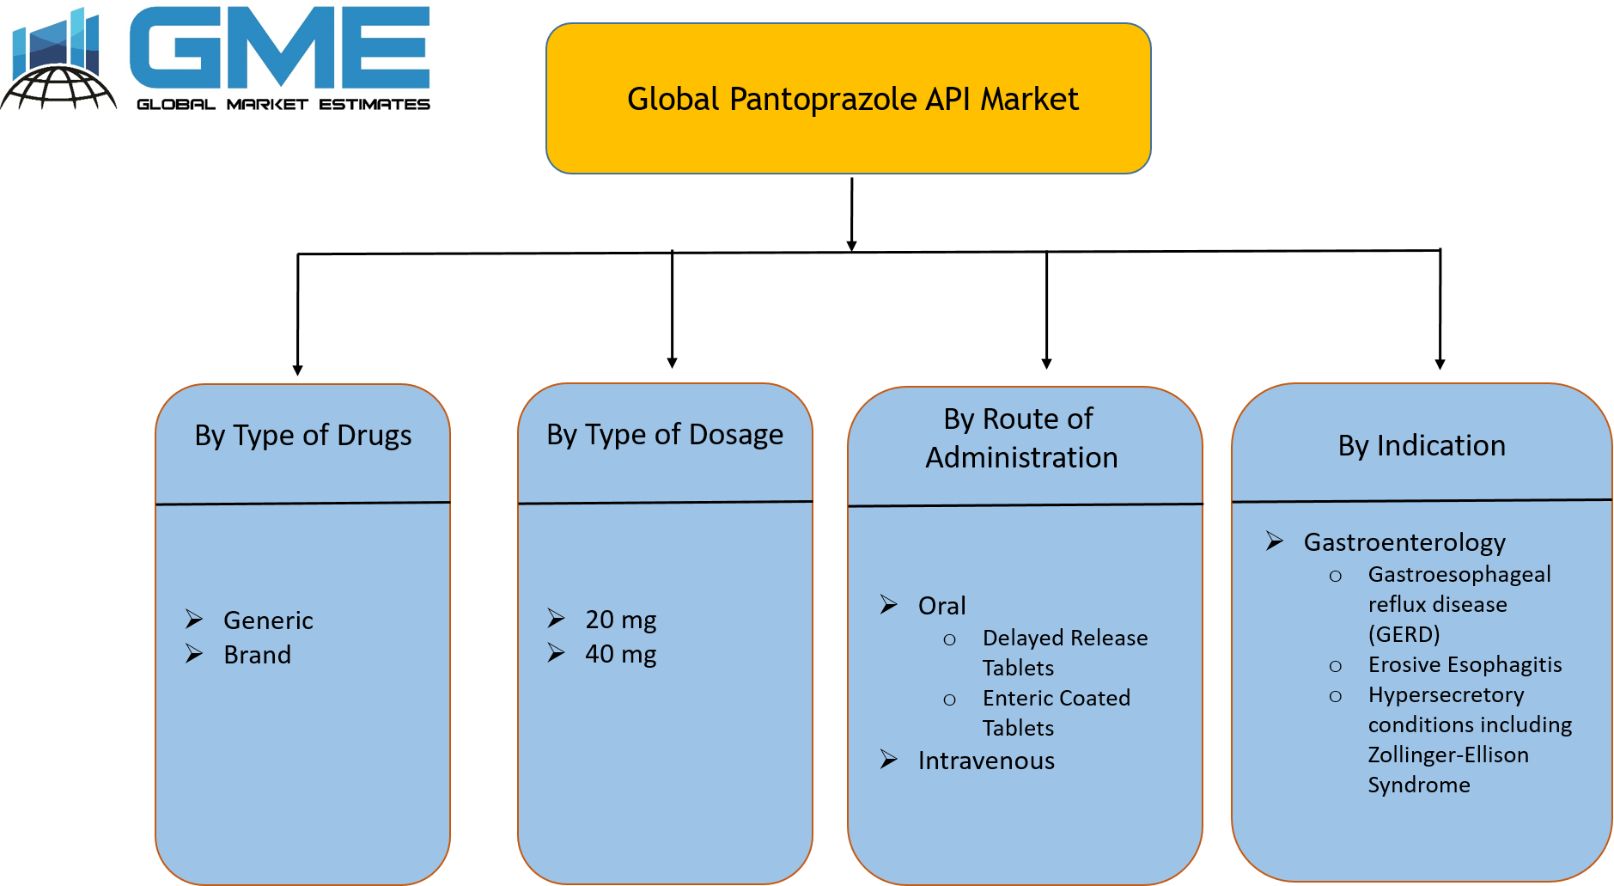 Global Pantoprazole API Market Segmentation